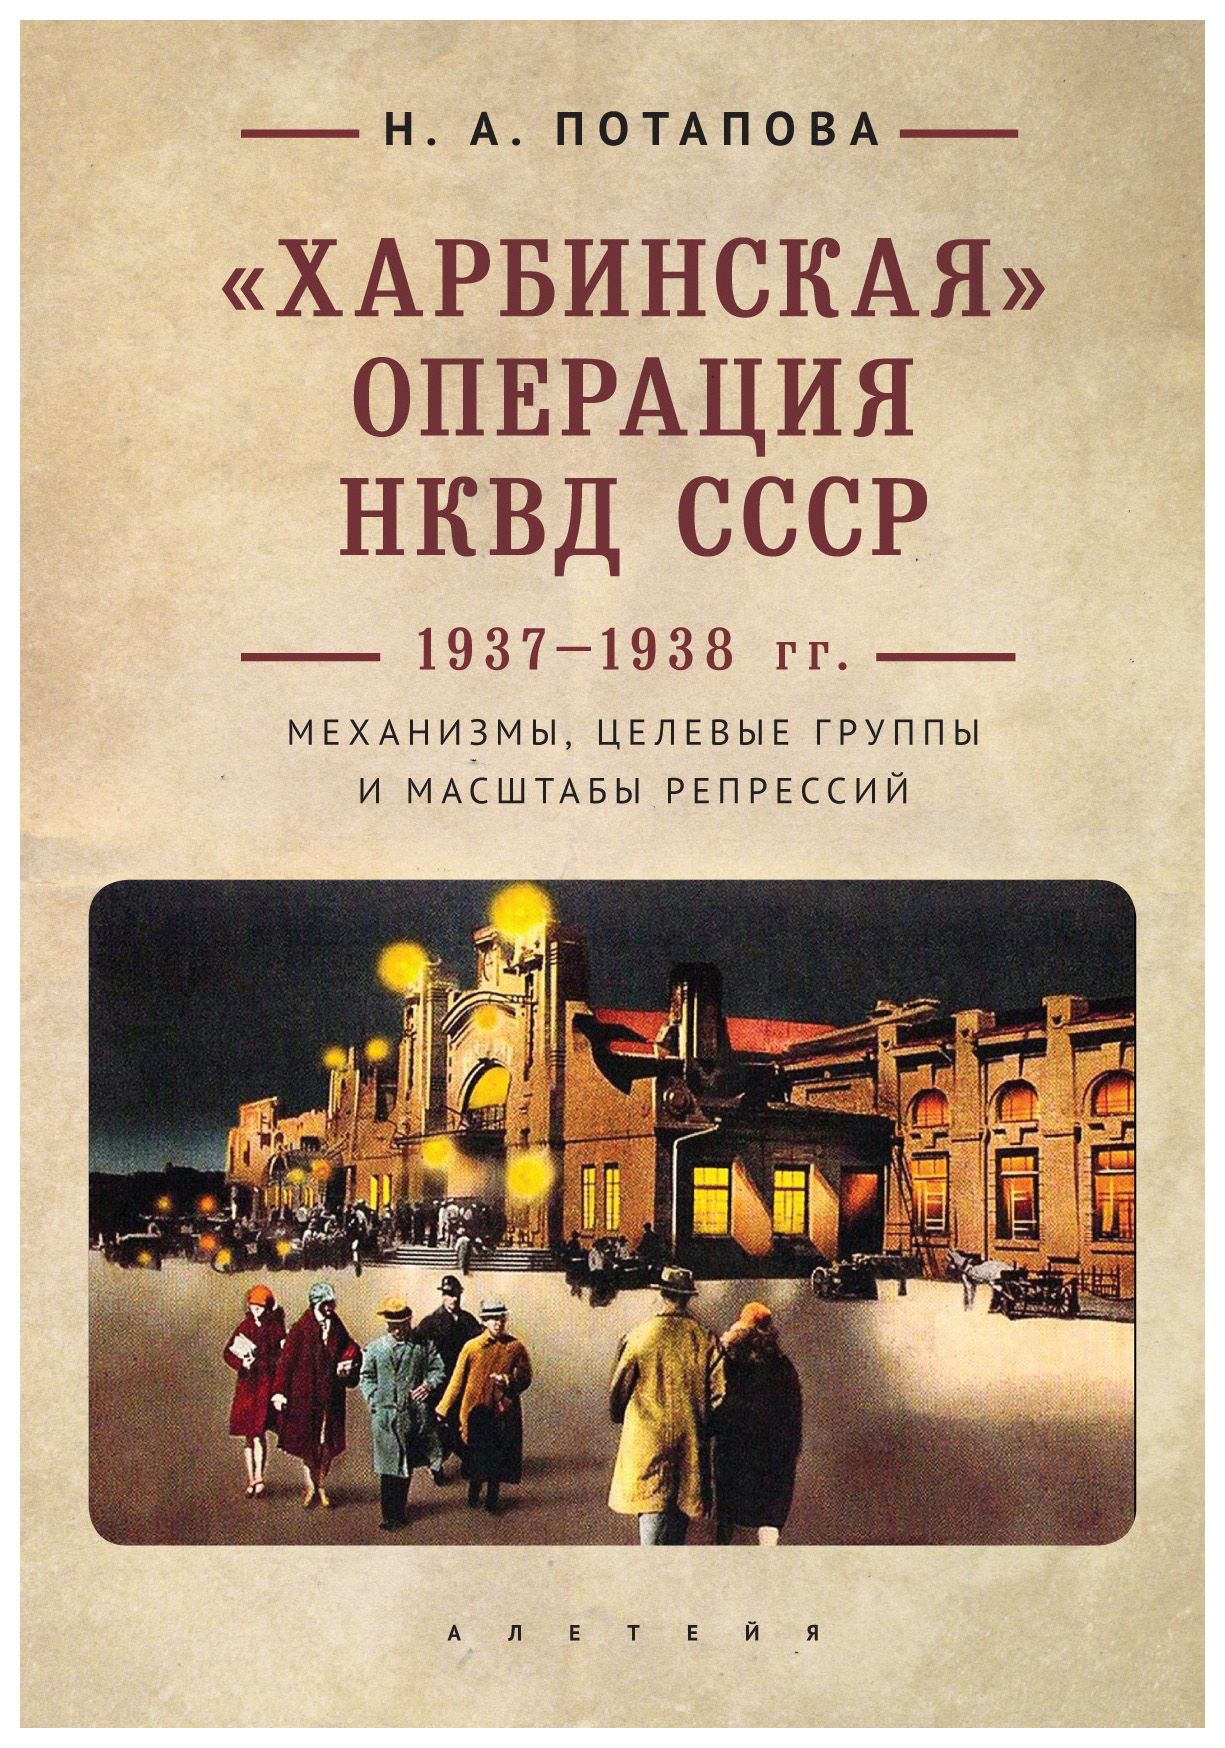 Потапова Н.А. - «Харбинская» операция НКВД СССР 1937-1938